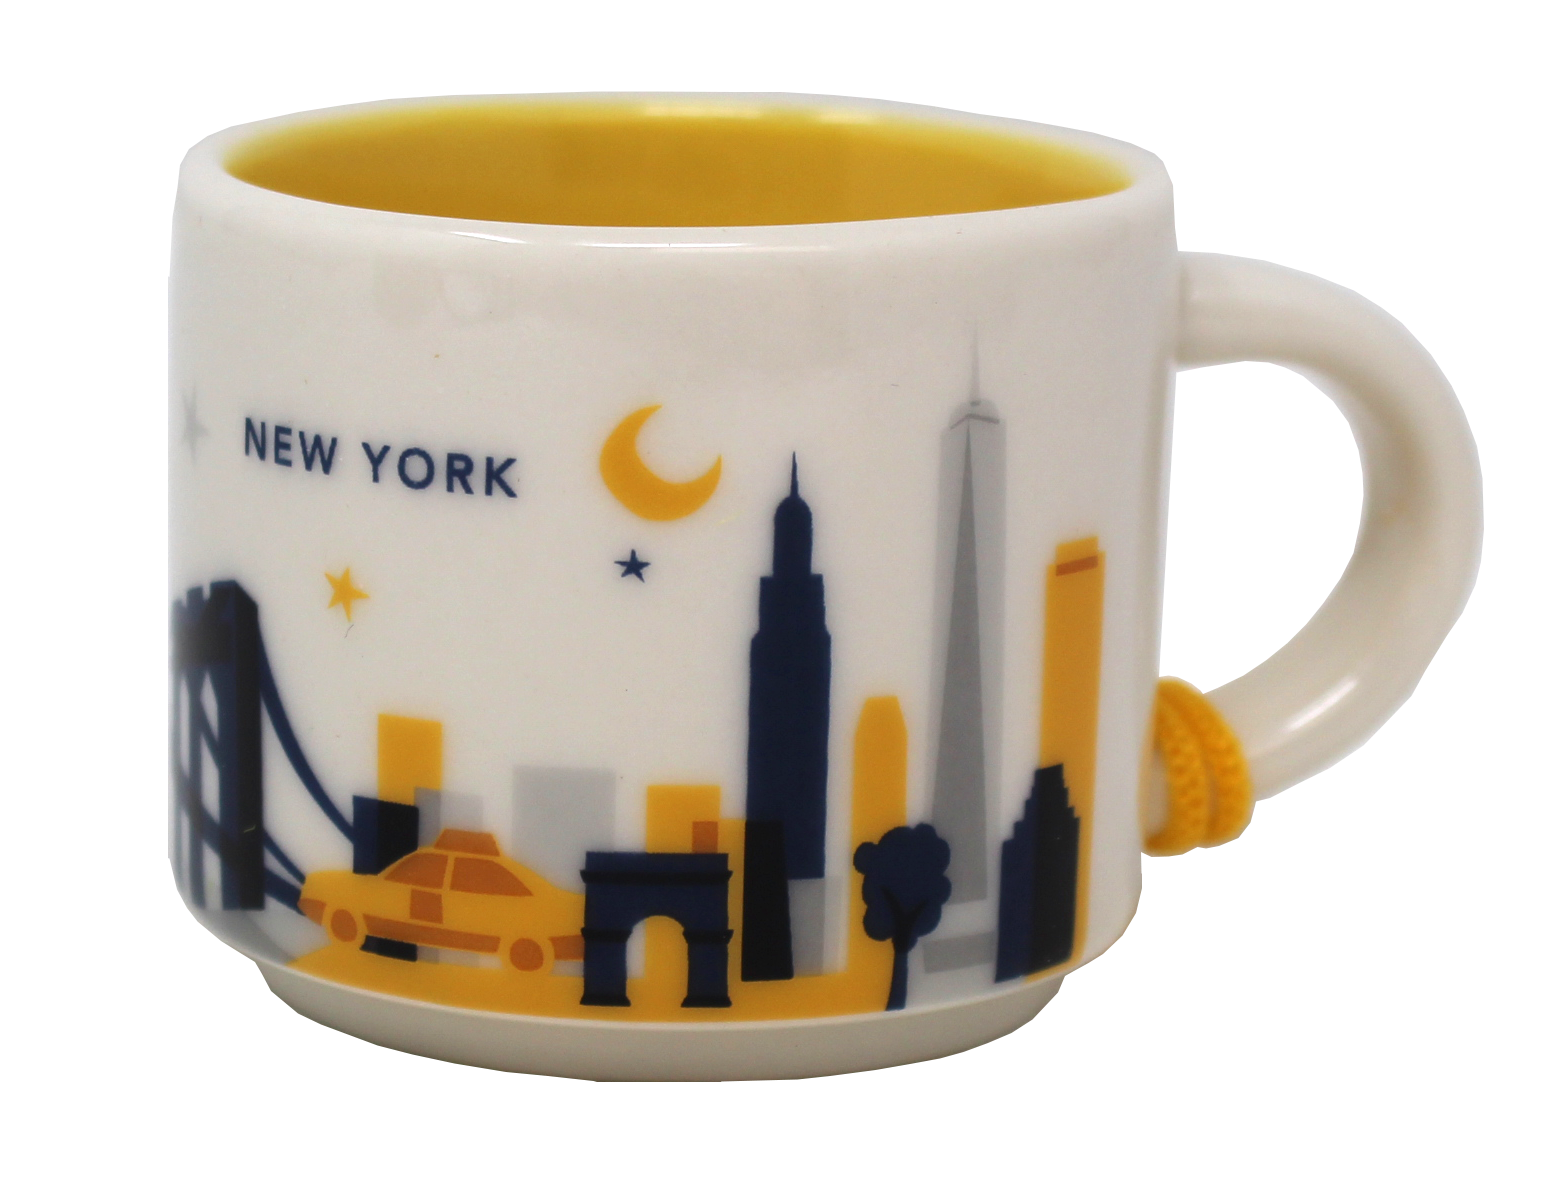 Starbucks You Are Here Series New York Ceramic Demitasse Ornament Mug, 2 Oz